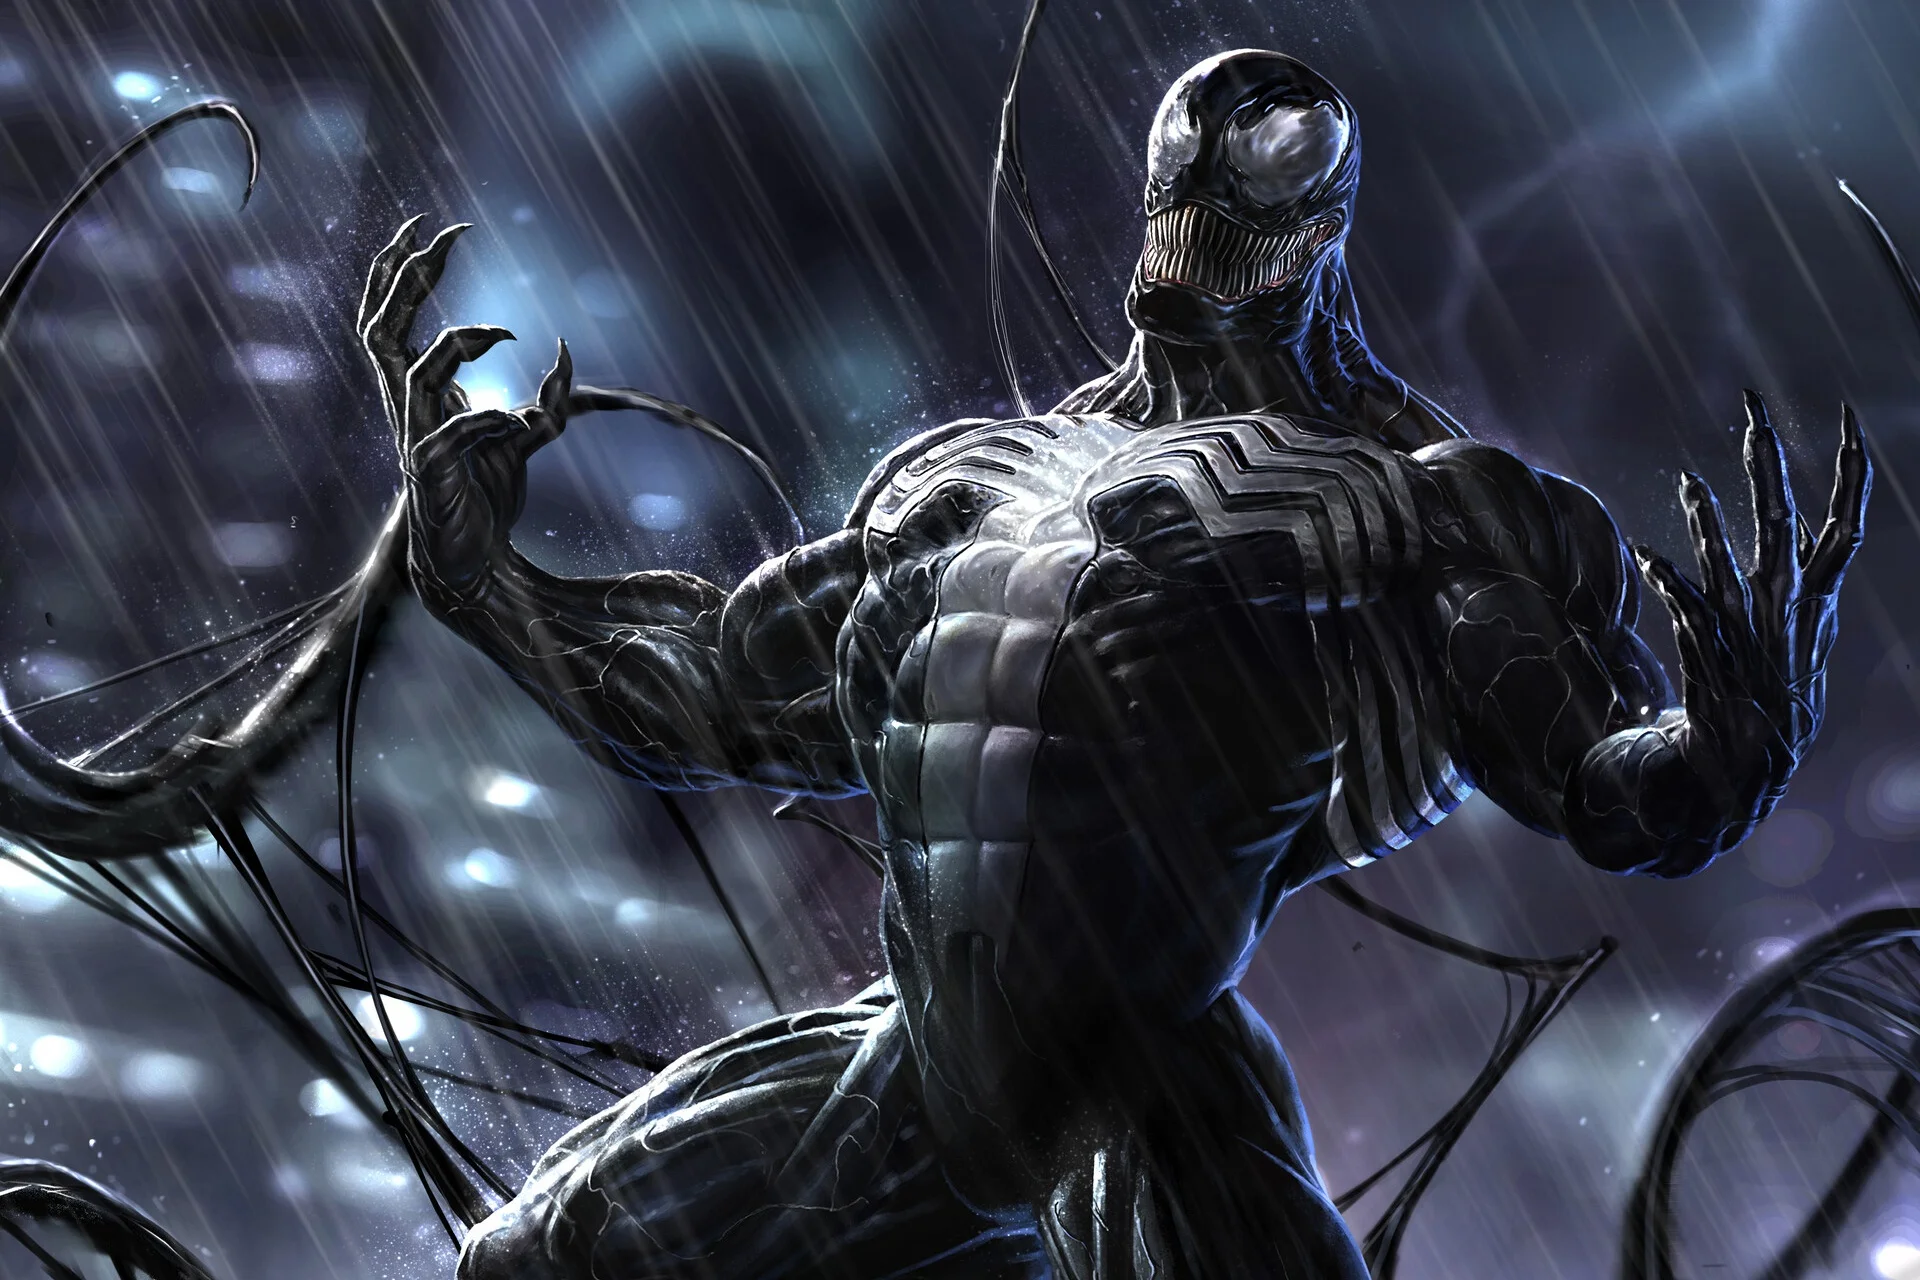 Image of Venom from Marvel's Spider-Man 2 posted online